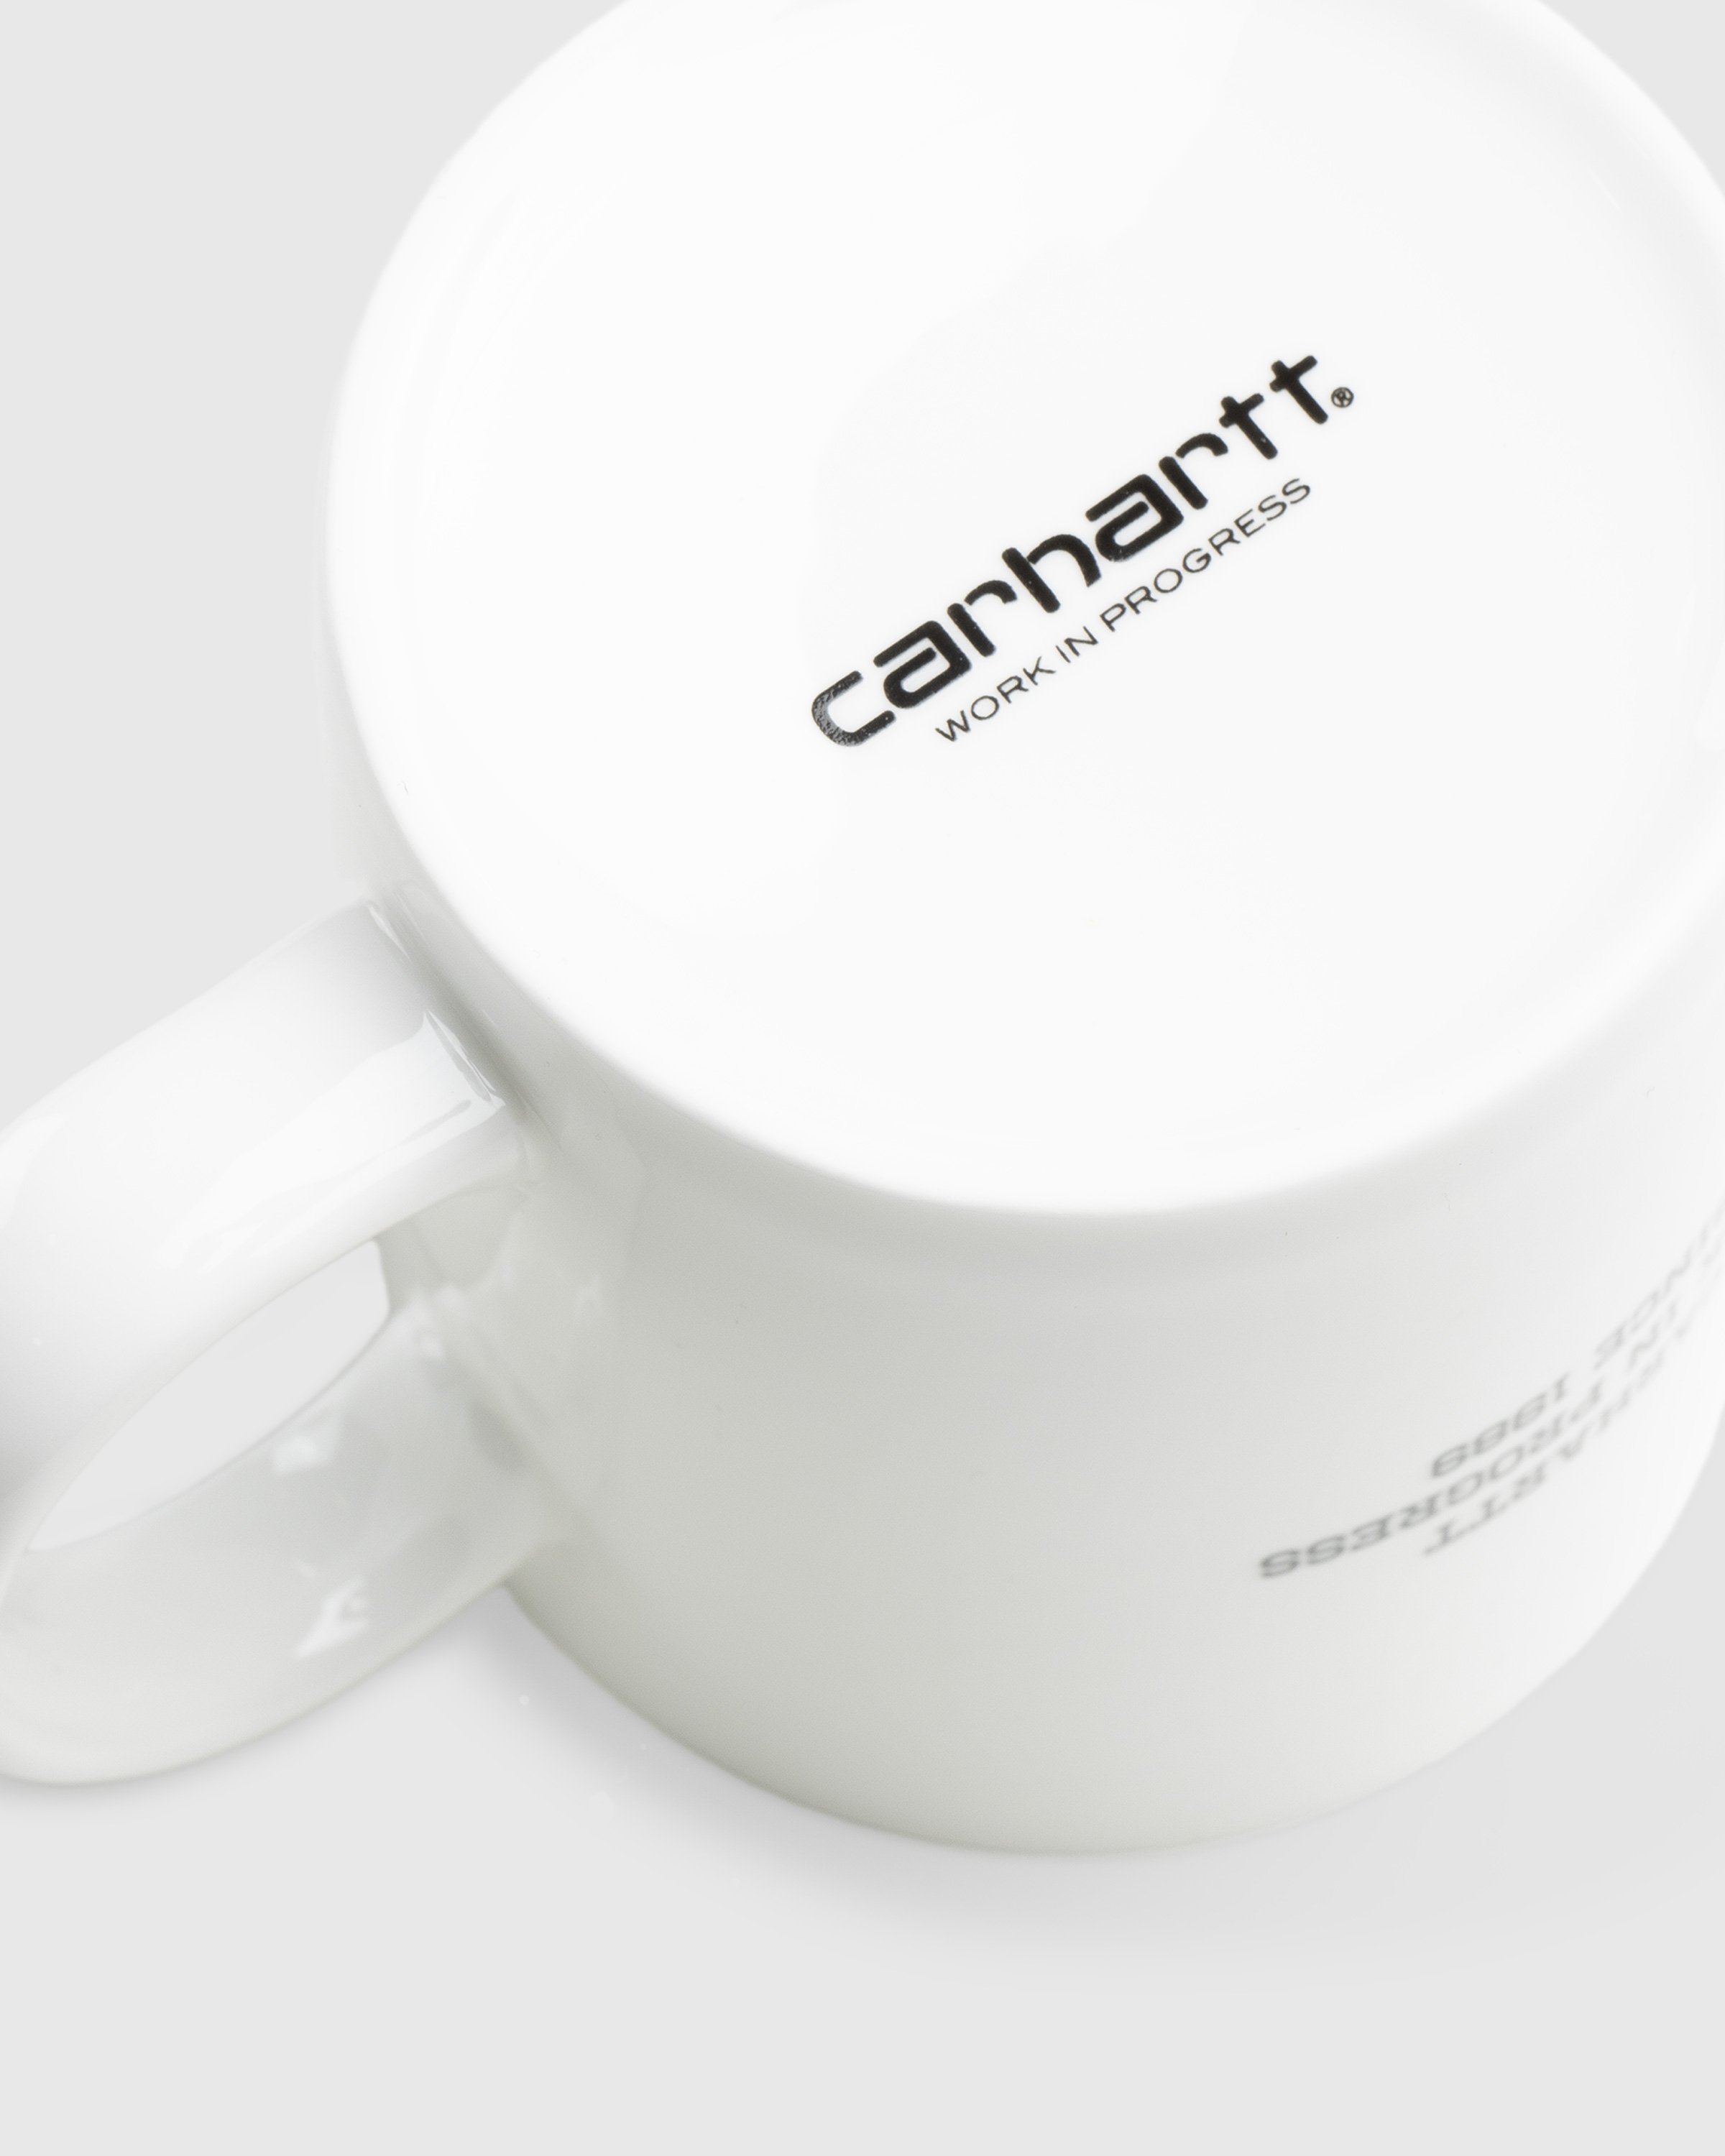 Carhartt WIP - Lasso Mug - Lifestyle - White - Image 3